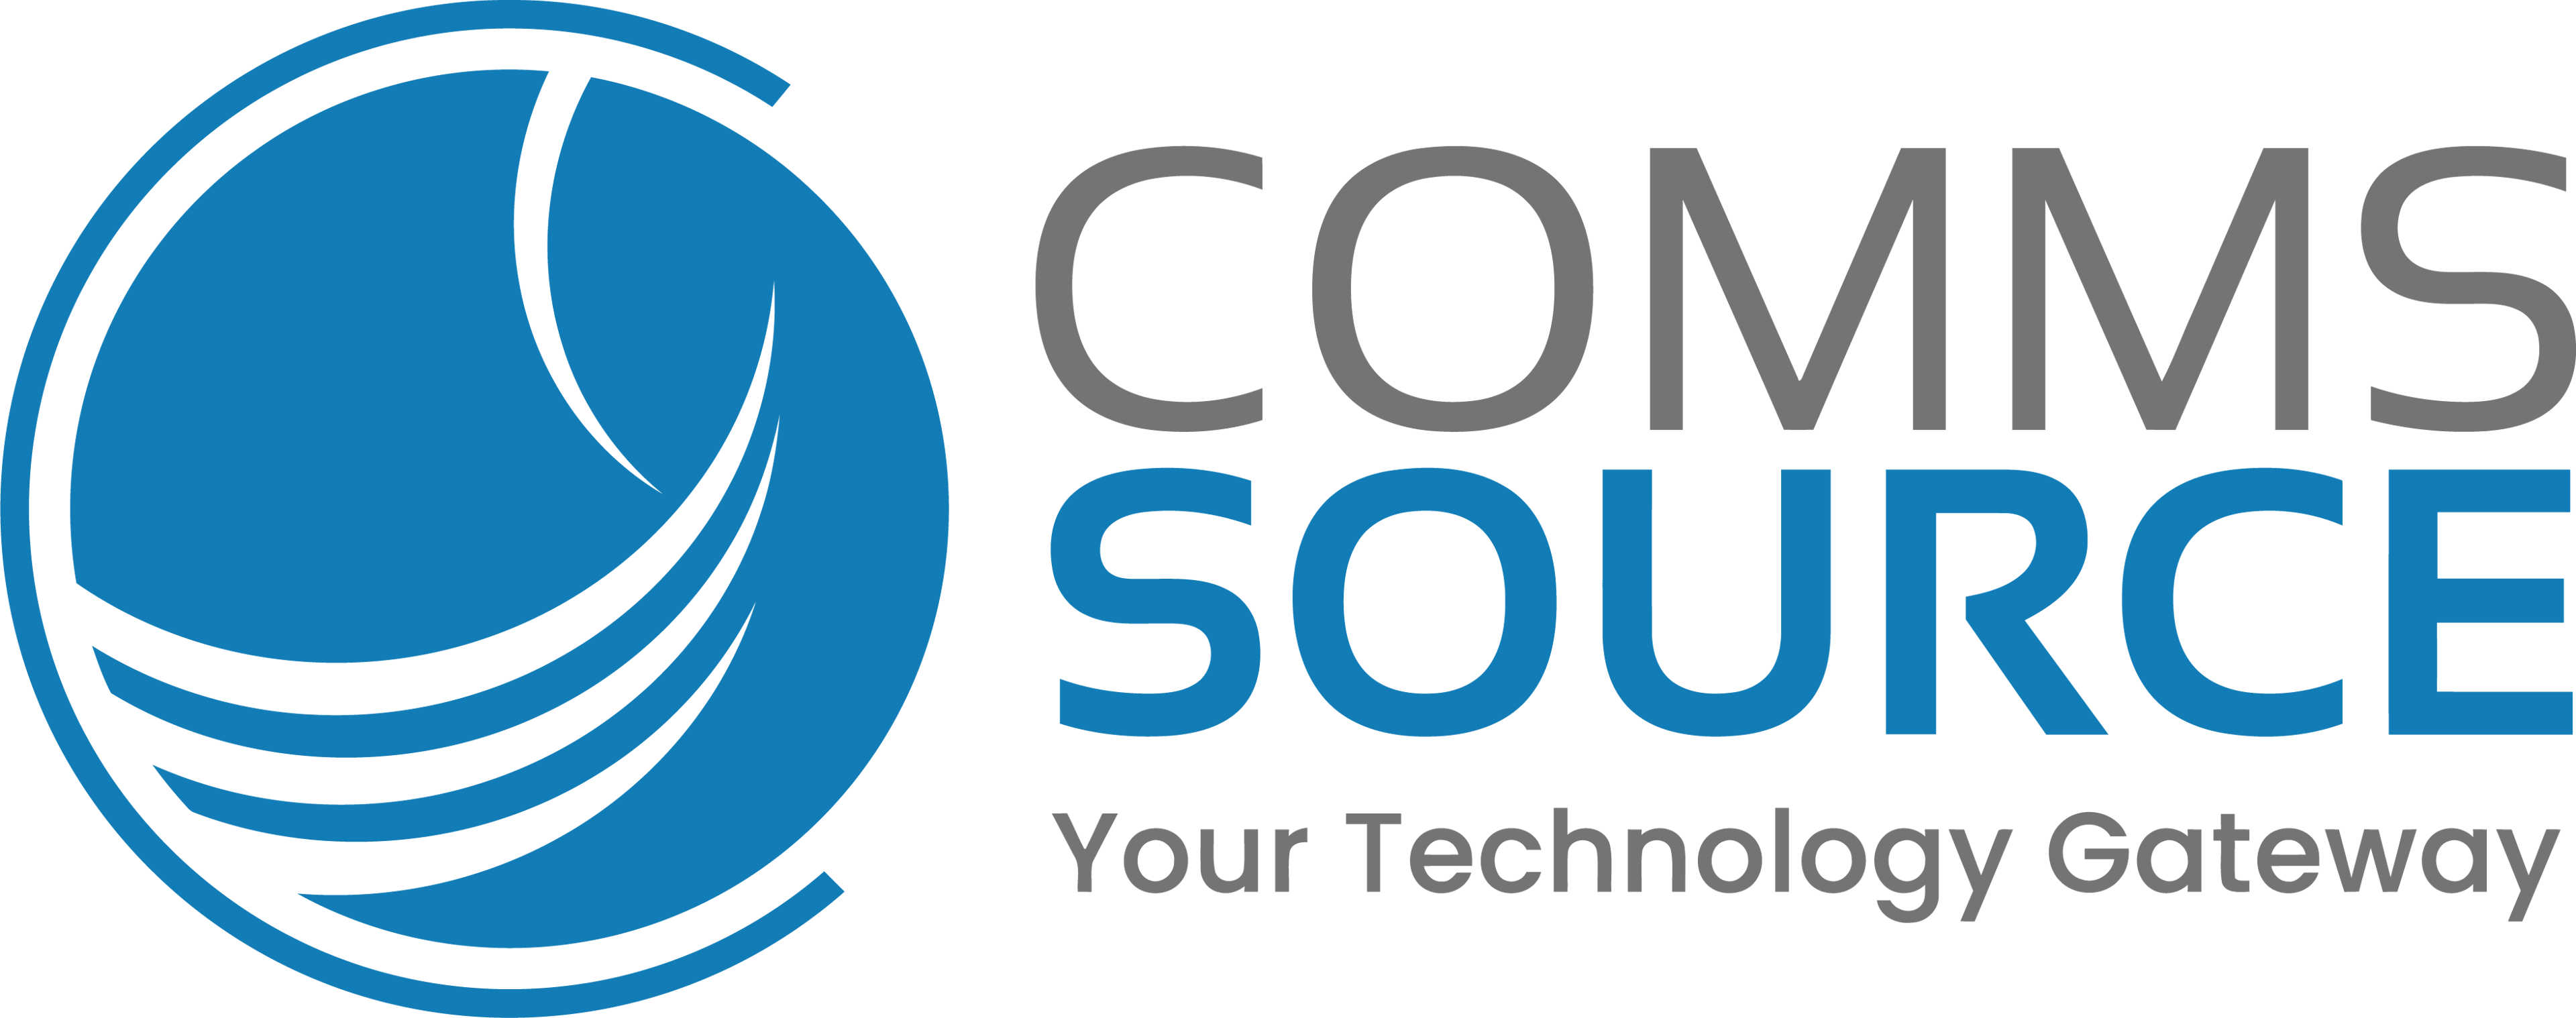 Comms Source Logo